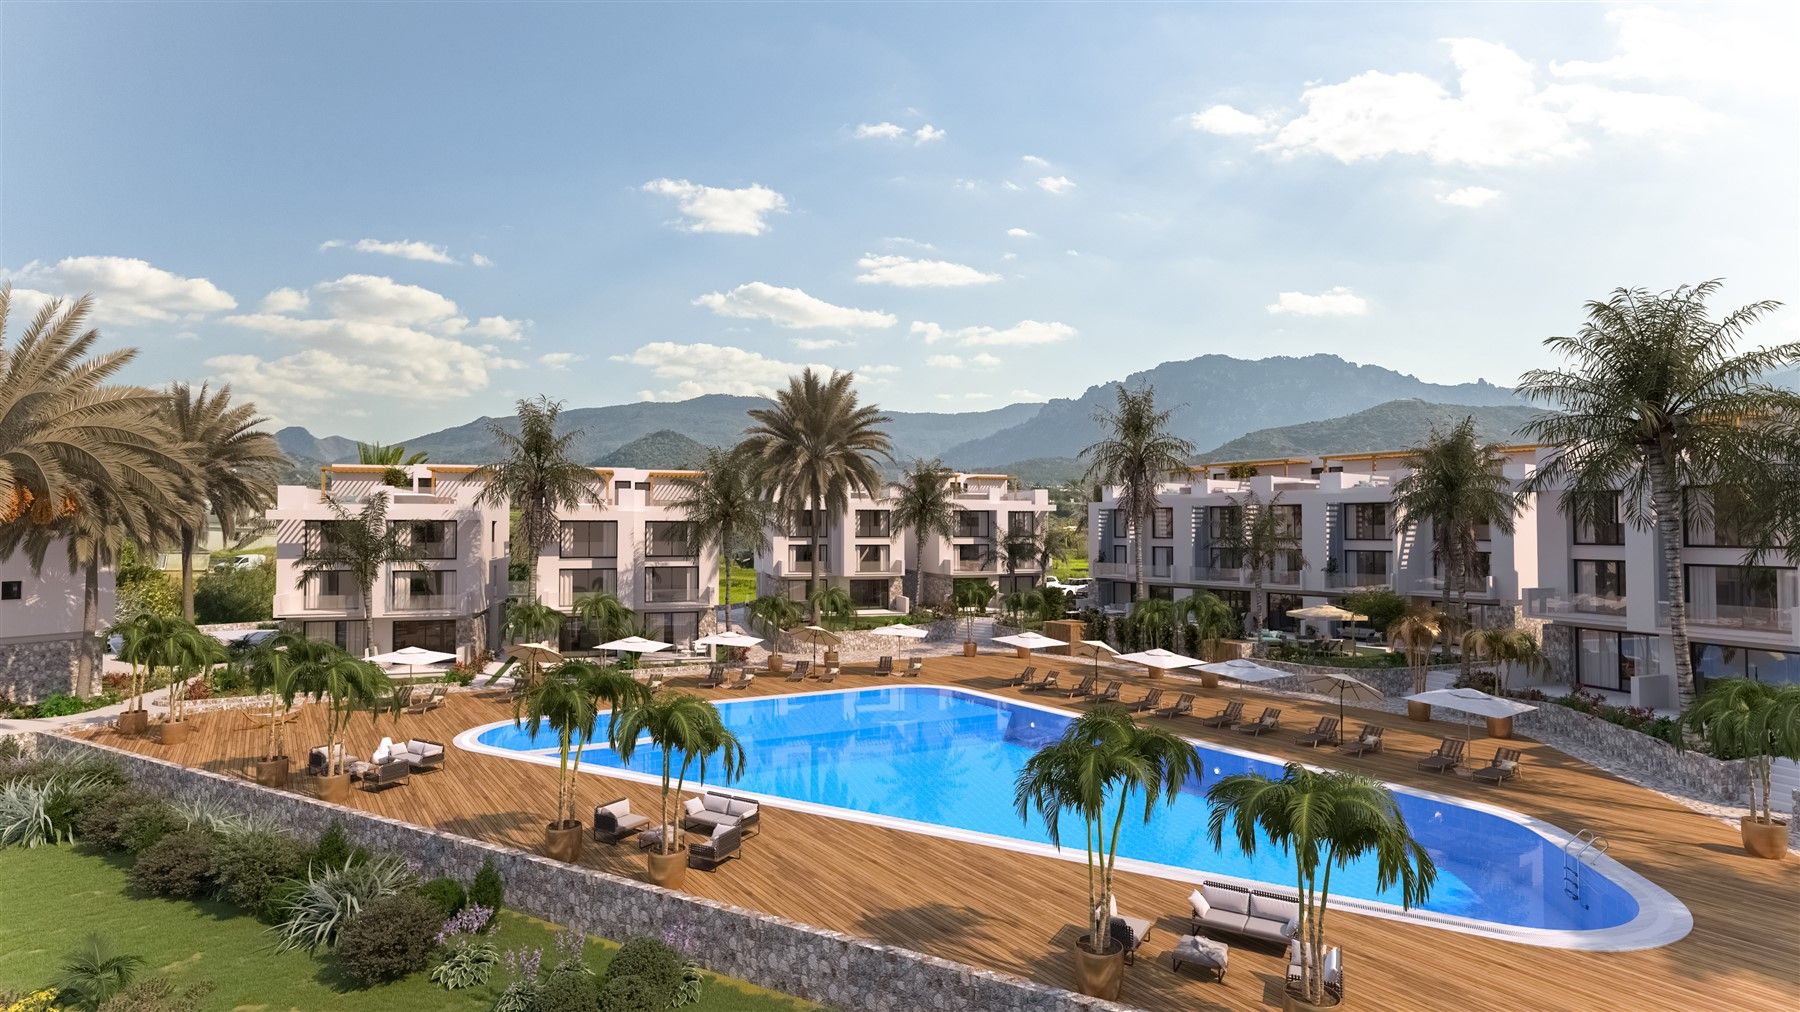 Duplex apartments in project near marina - Northern Cyprus